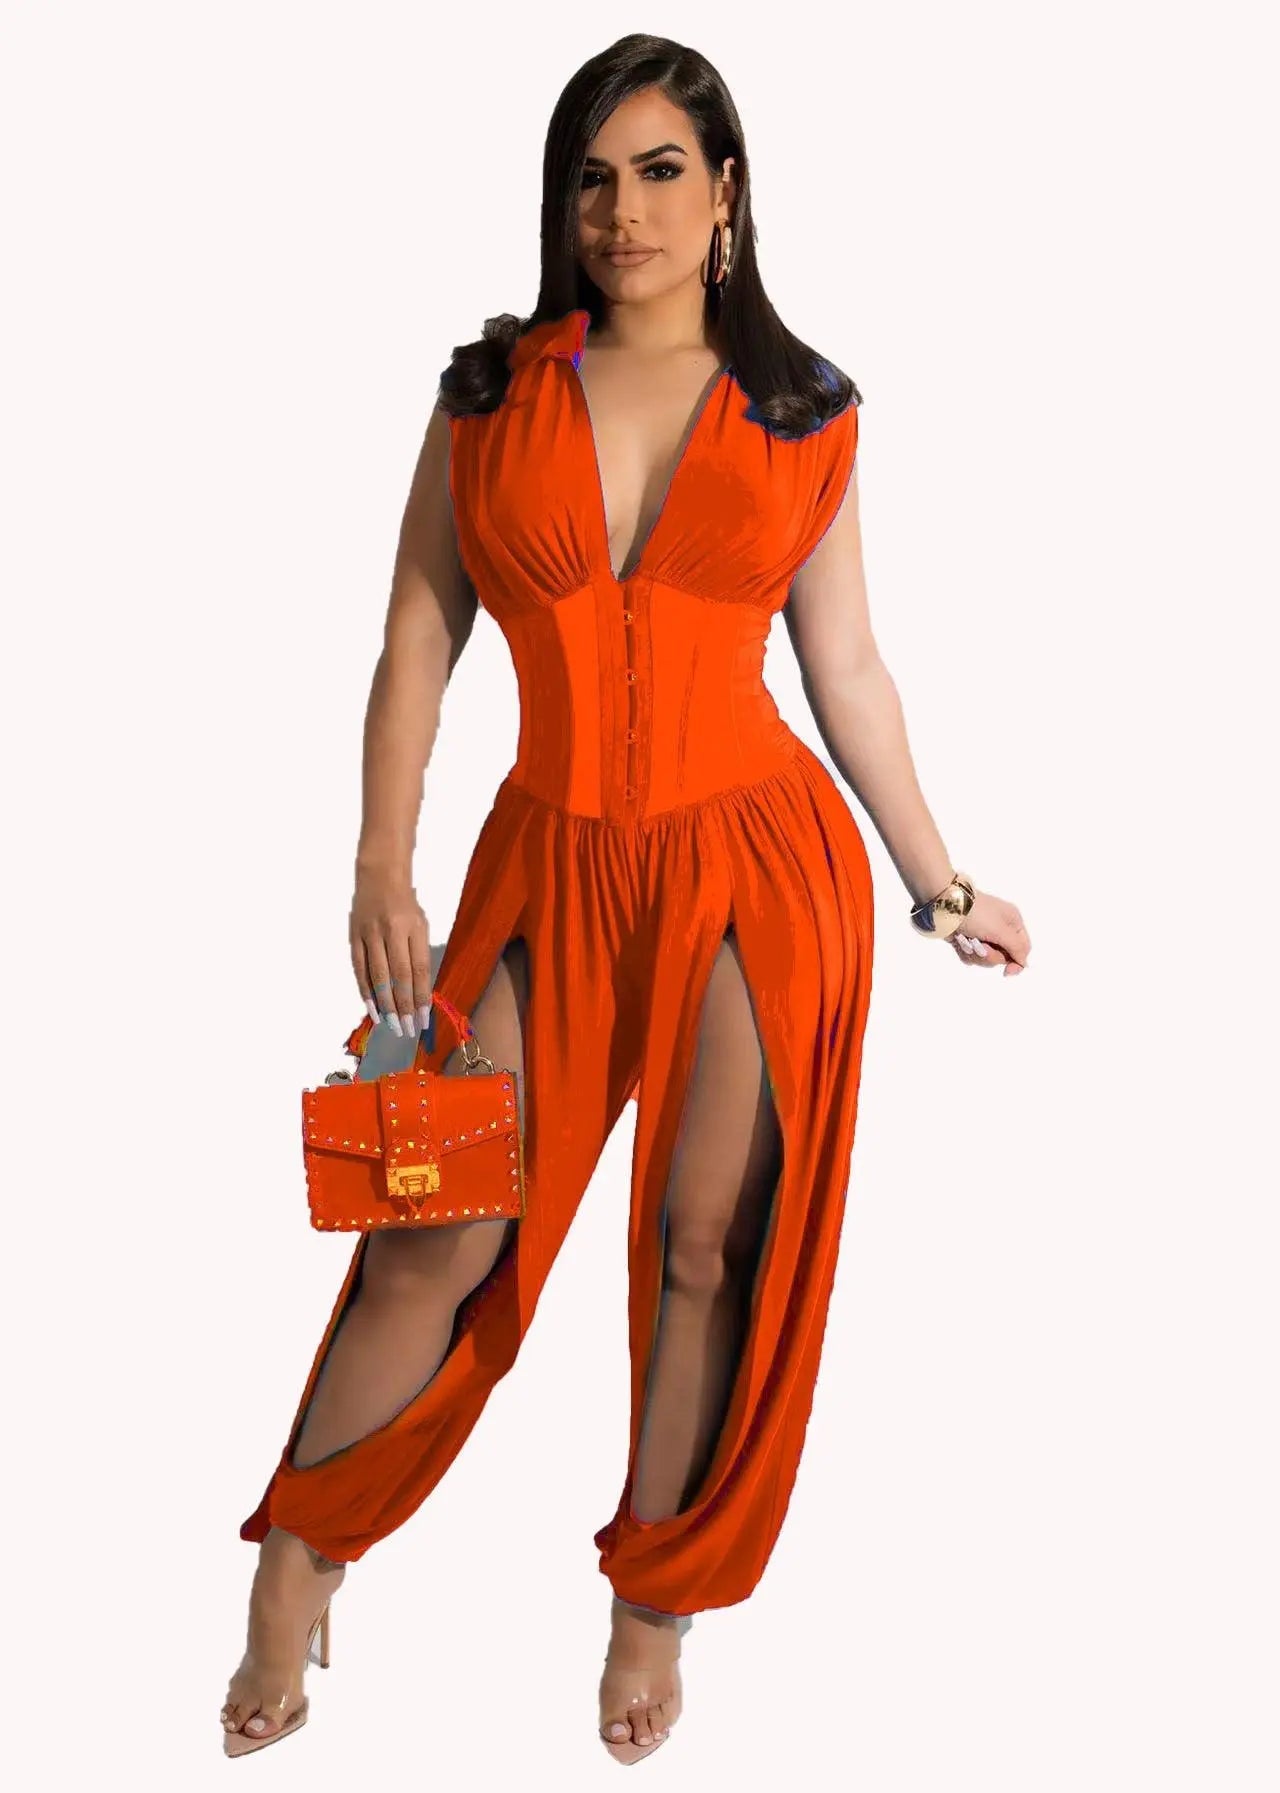 New Solid Color Sleeveless Romper Women Jumpsuits Alpha C Apparel L / Orange